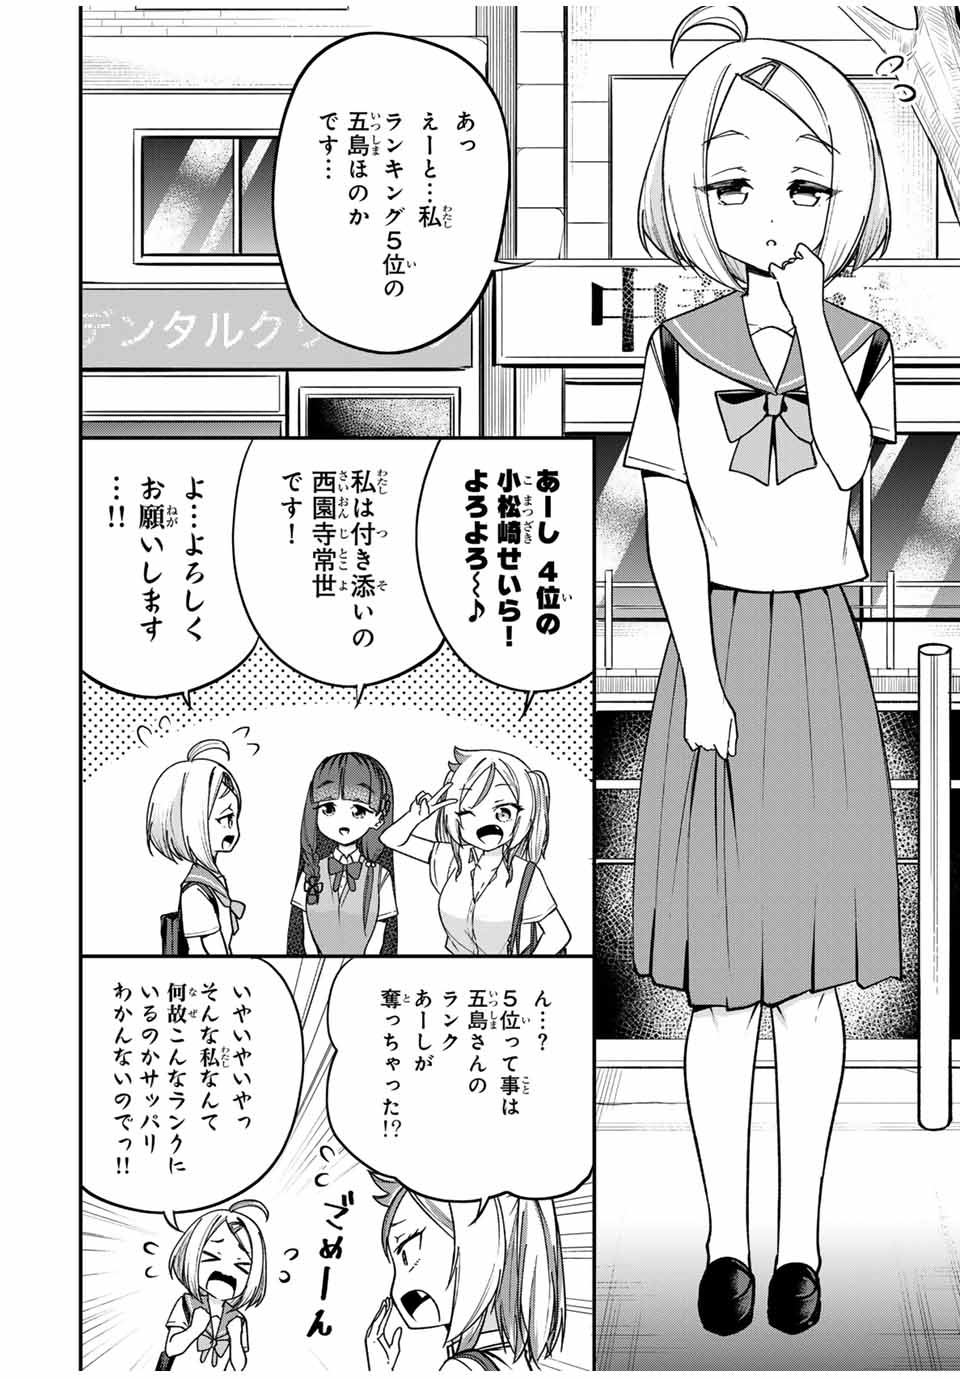 Heroine wa xx Okasegitai - Chapter 11 - Page 16